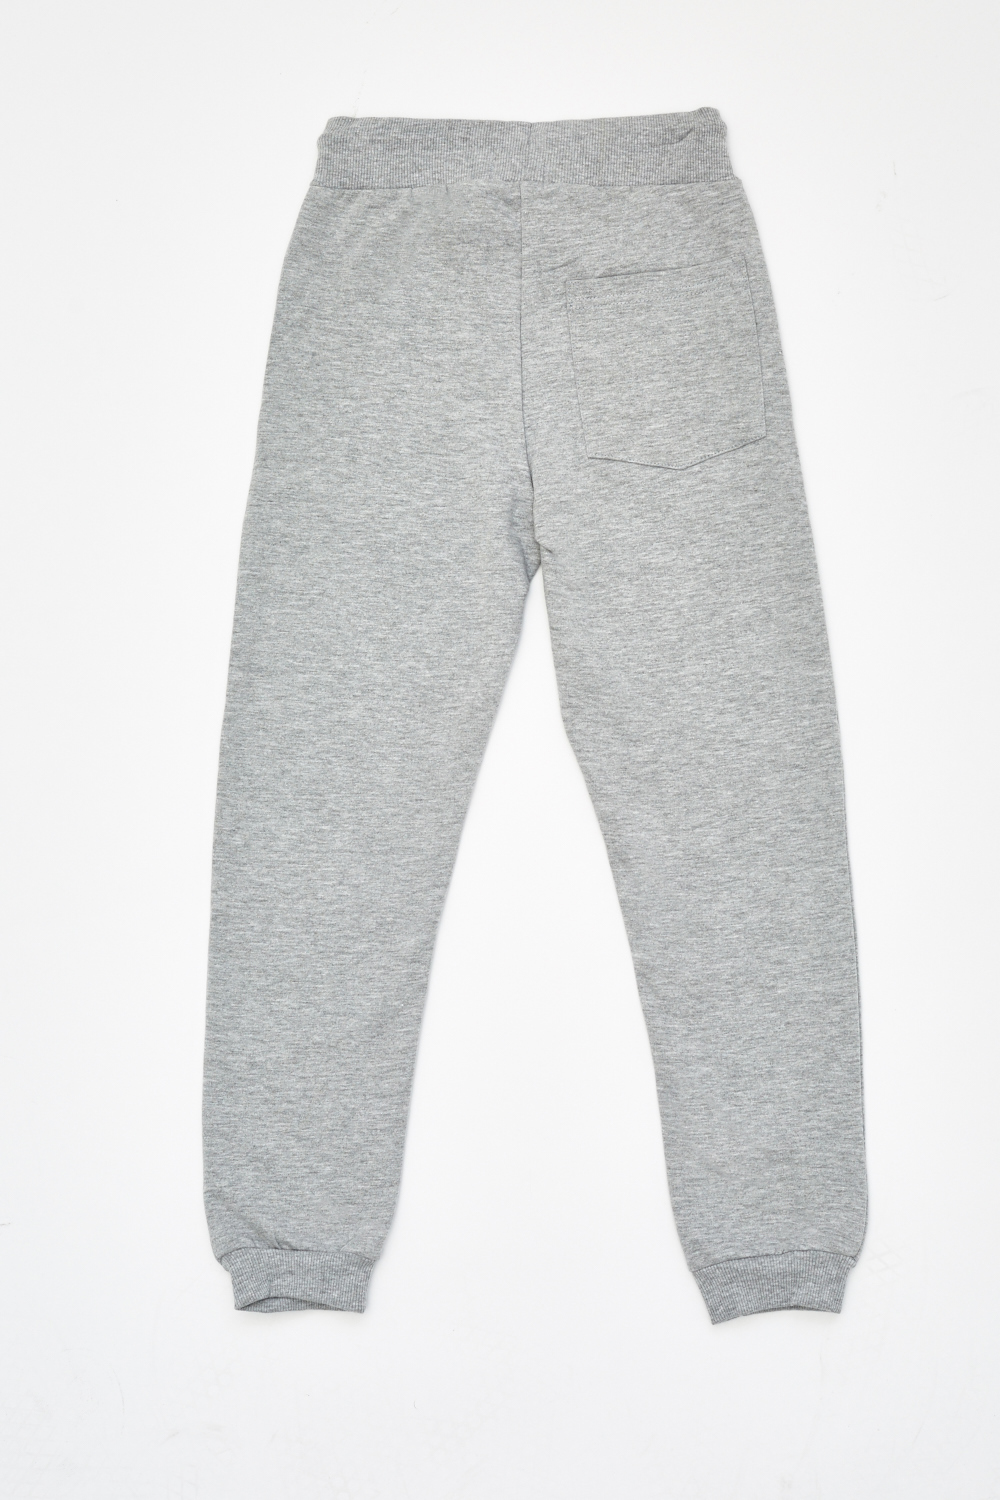 Light Grey Jogger Pants - Just $7